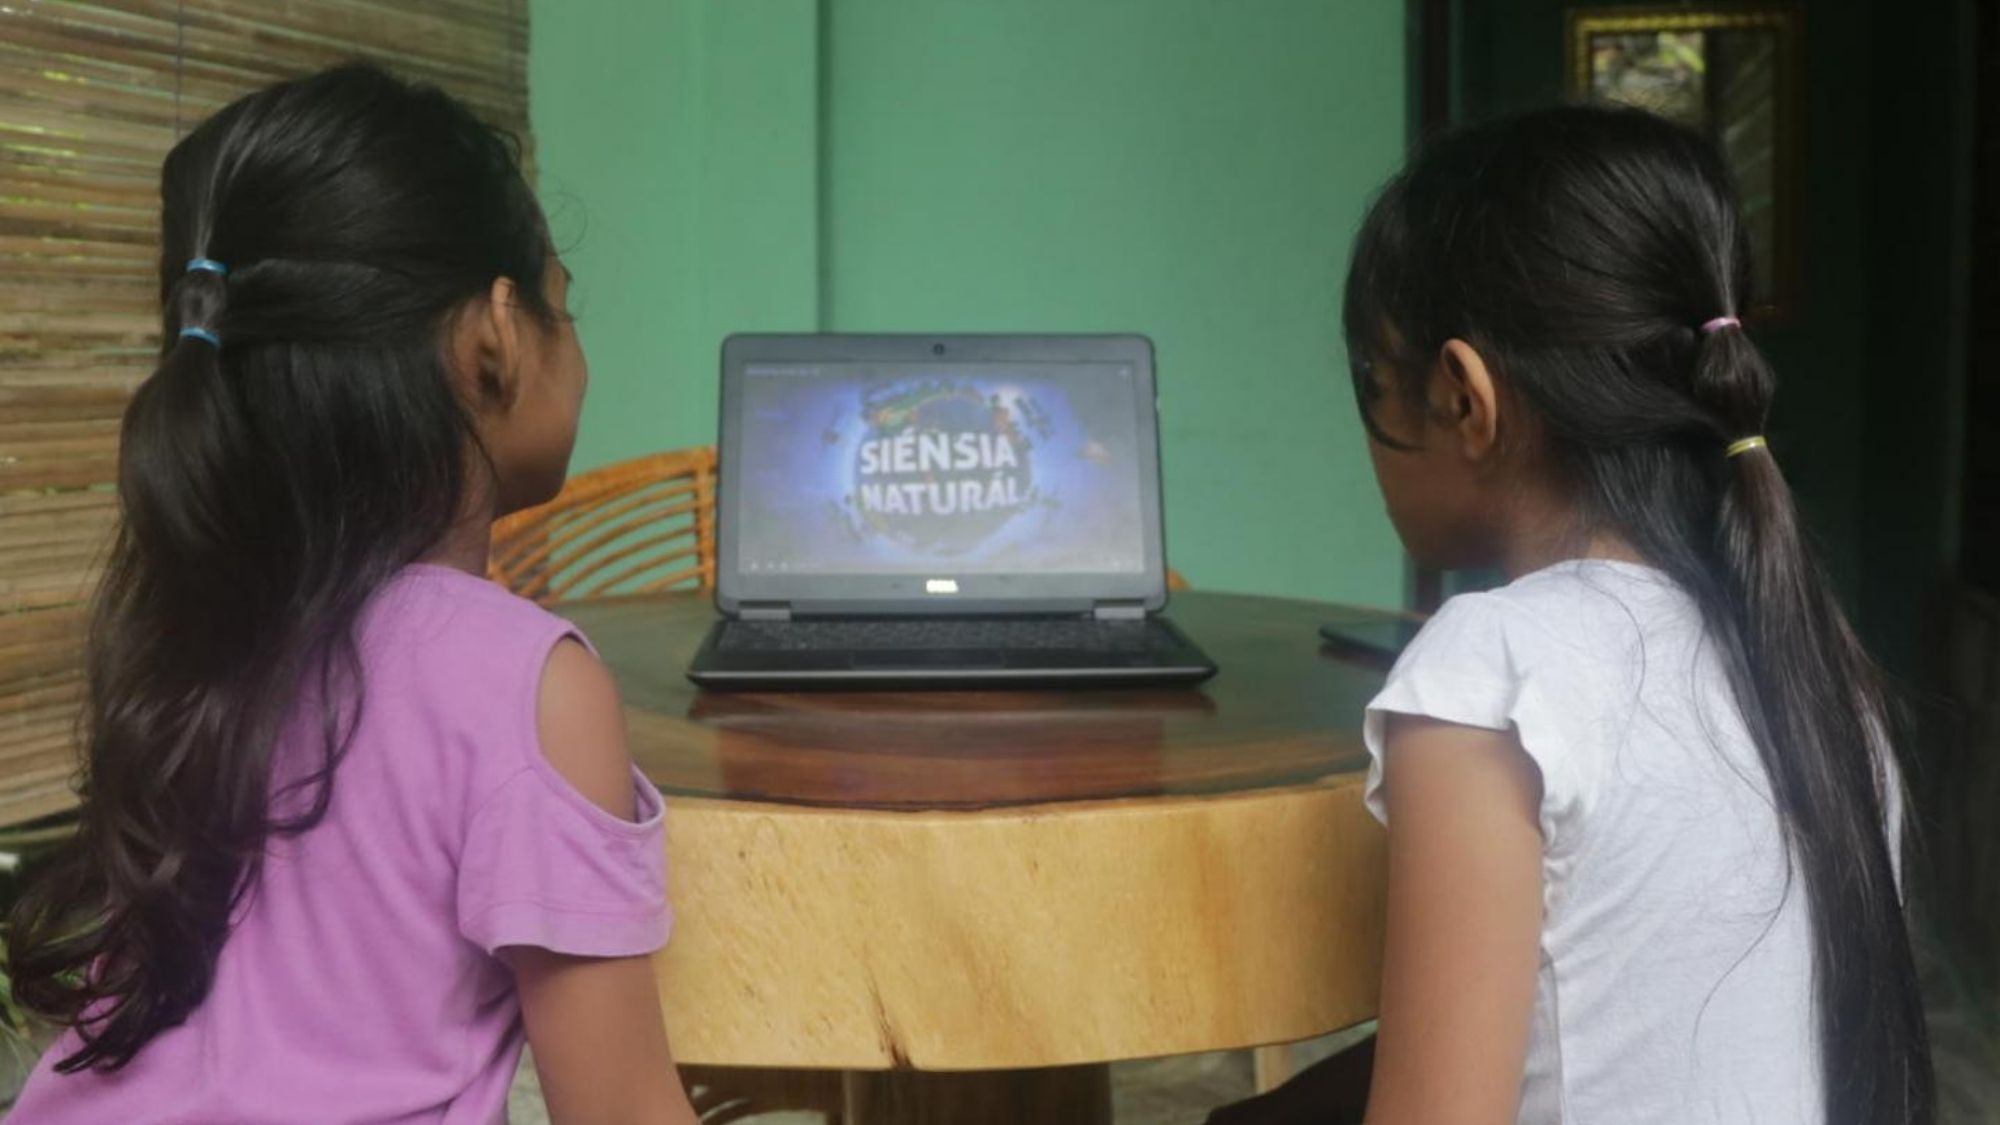  Keep them safe; parents urged to watch kids' online activities